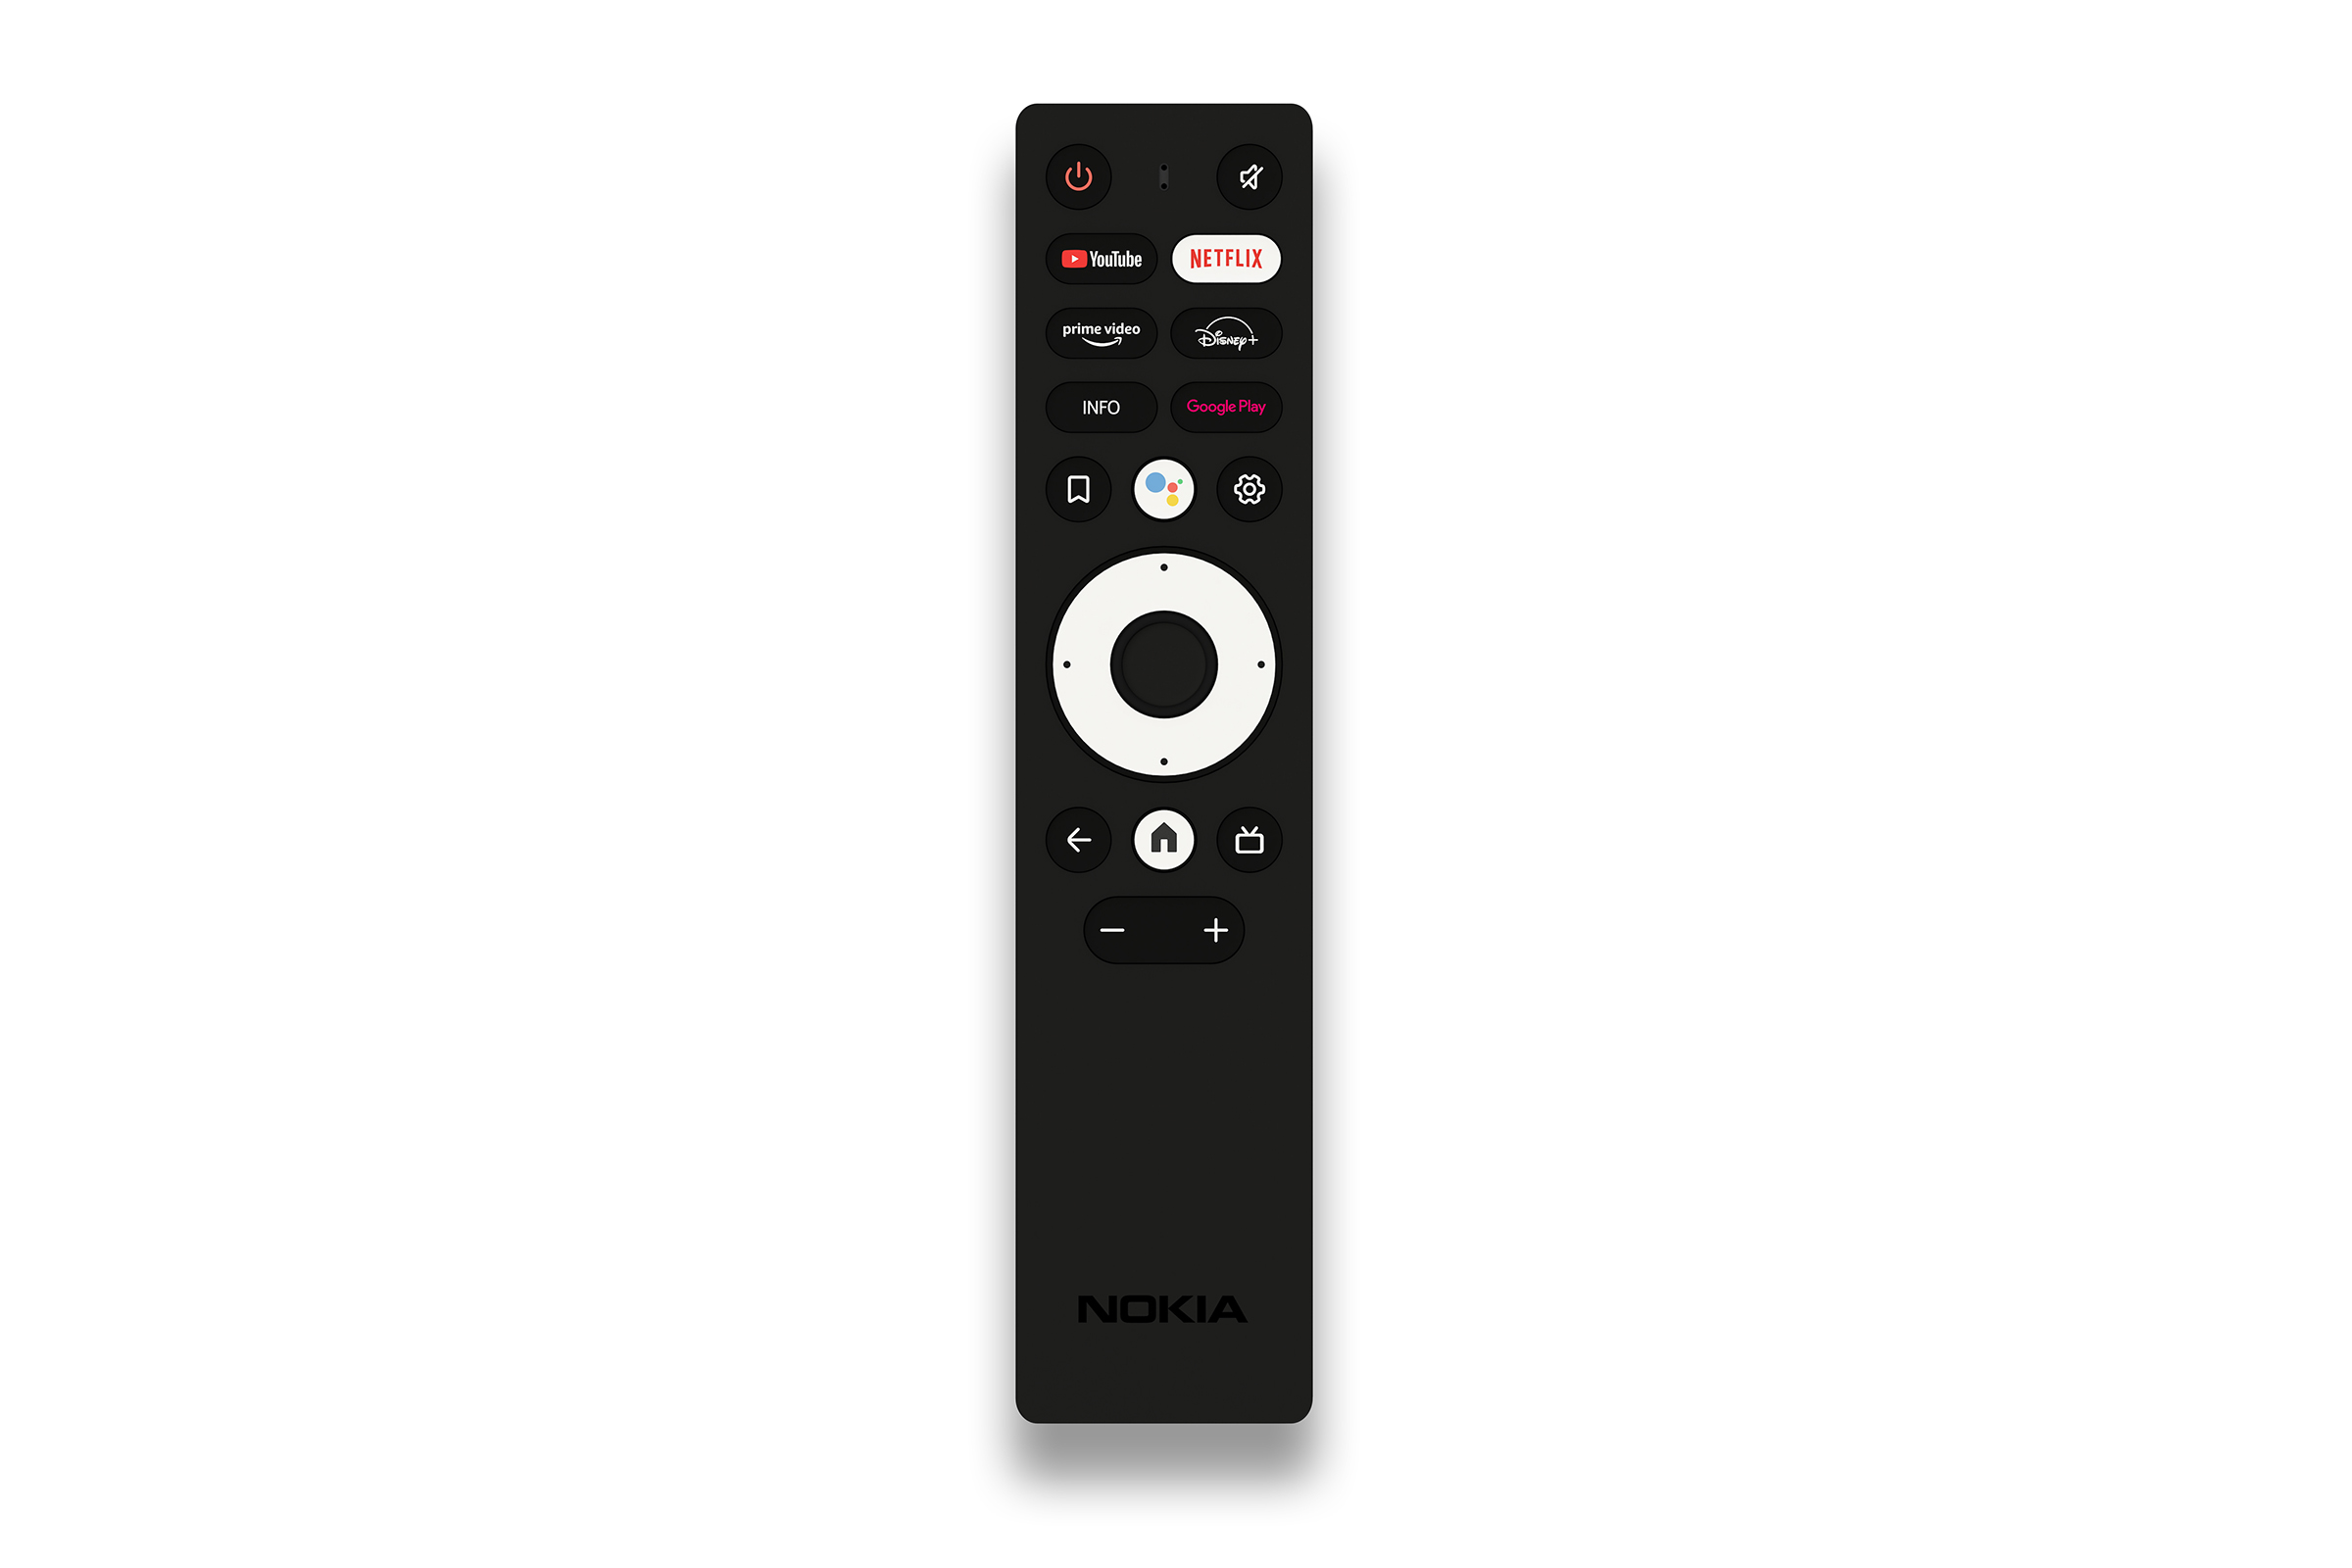 Nokia small remote control (Nokia Streaming Box 8000) 